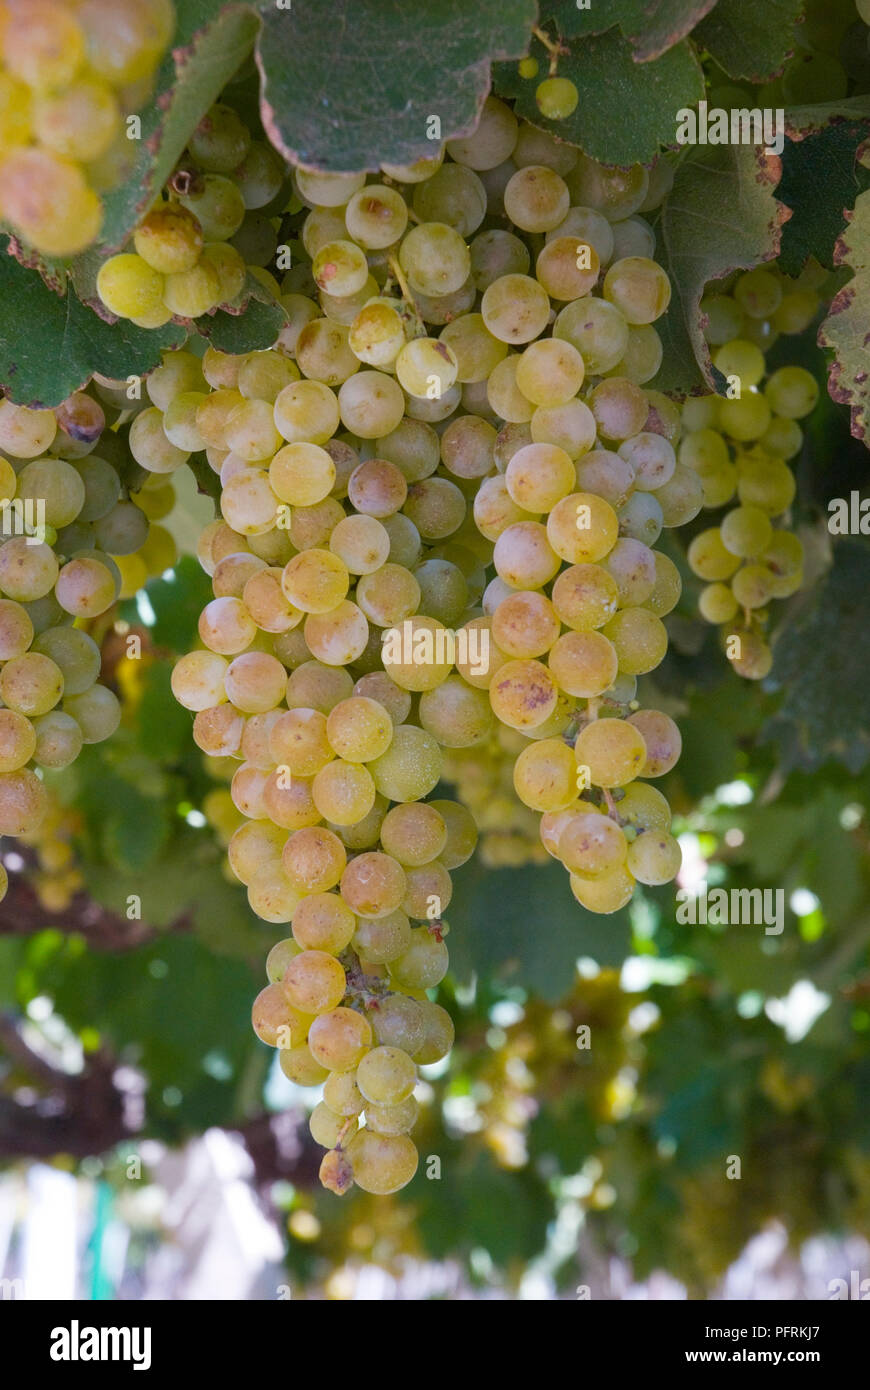 Argentina, Cuyo, Mendoza, Torrontes grapes on vines Stock Photo